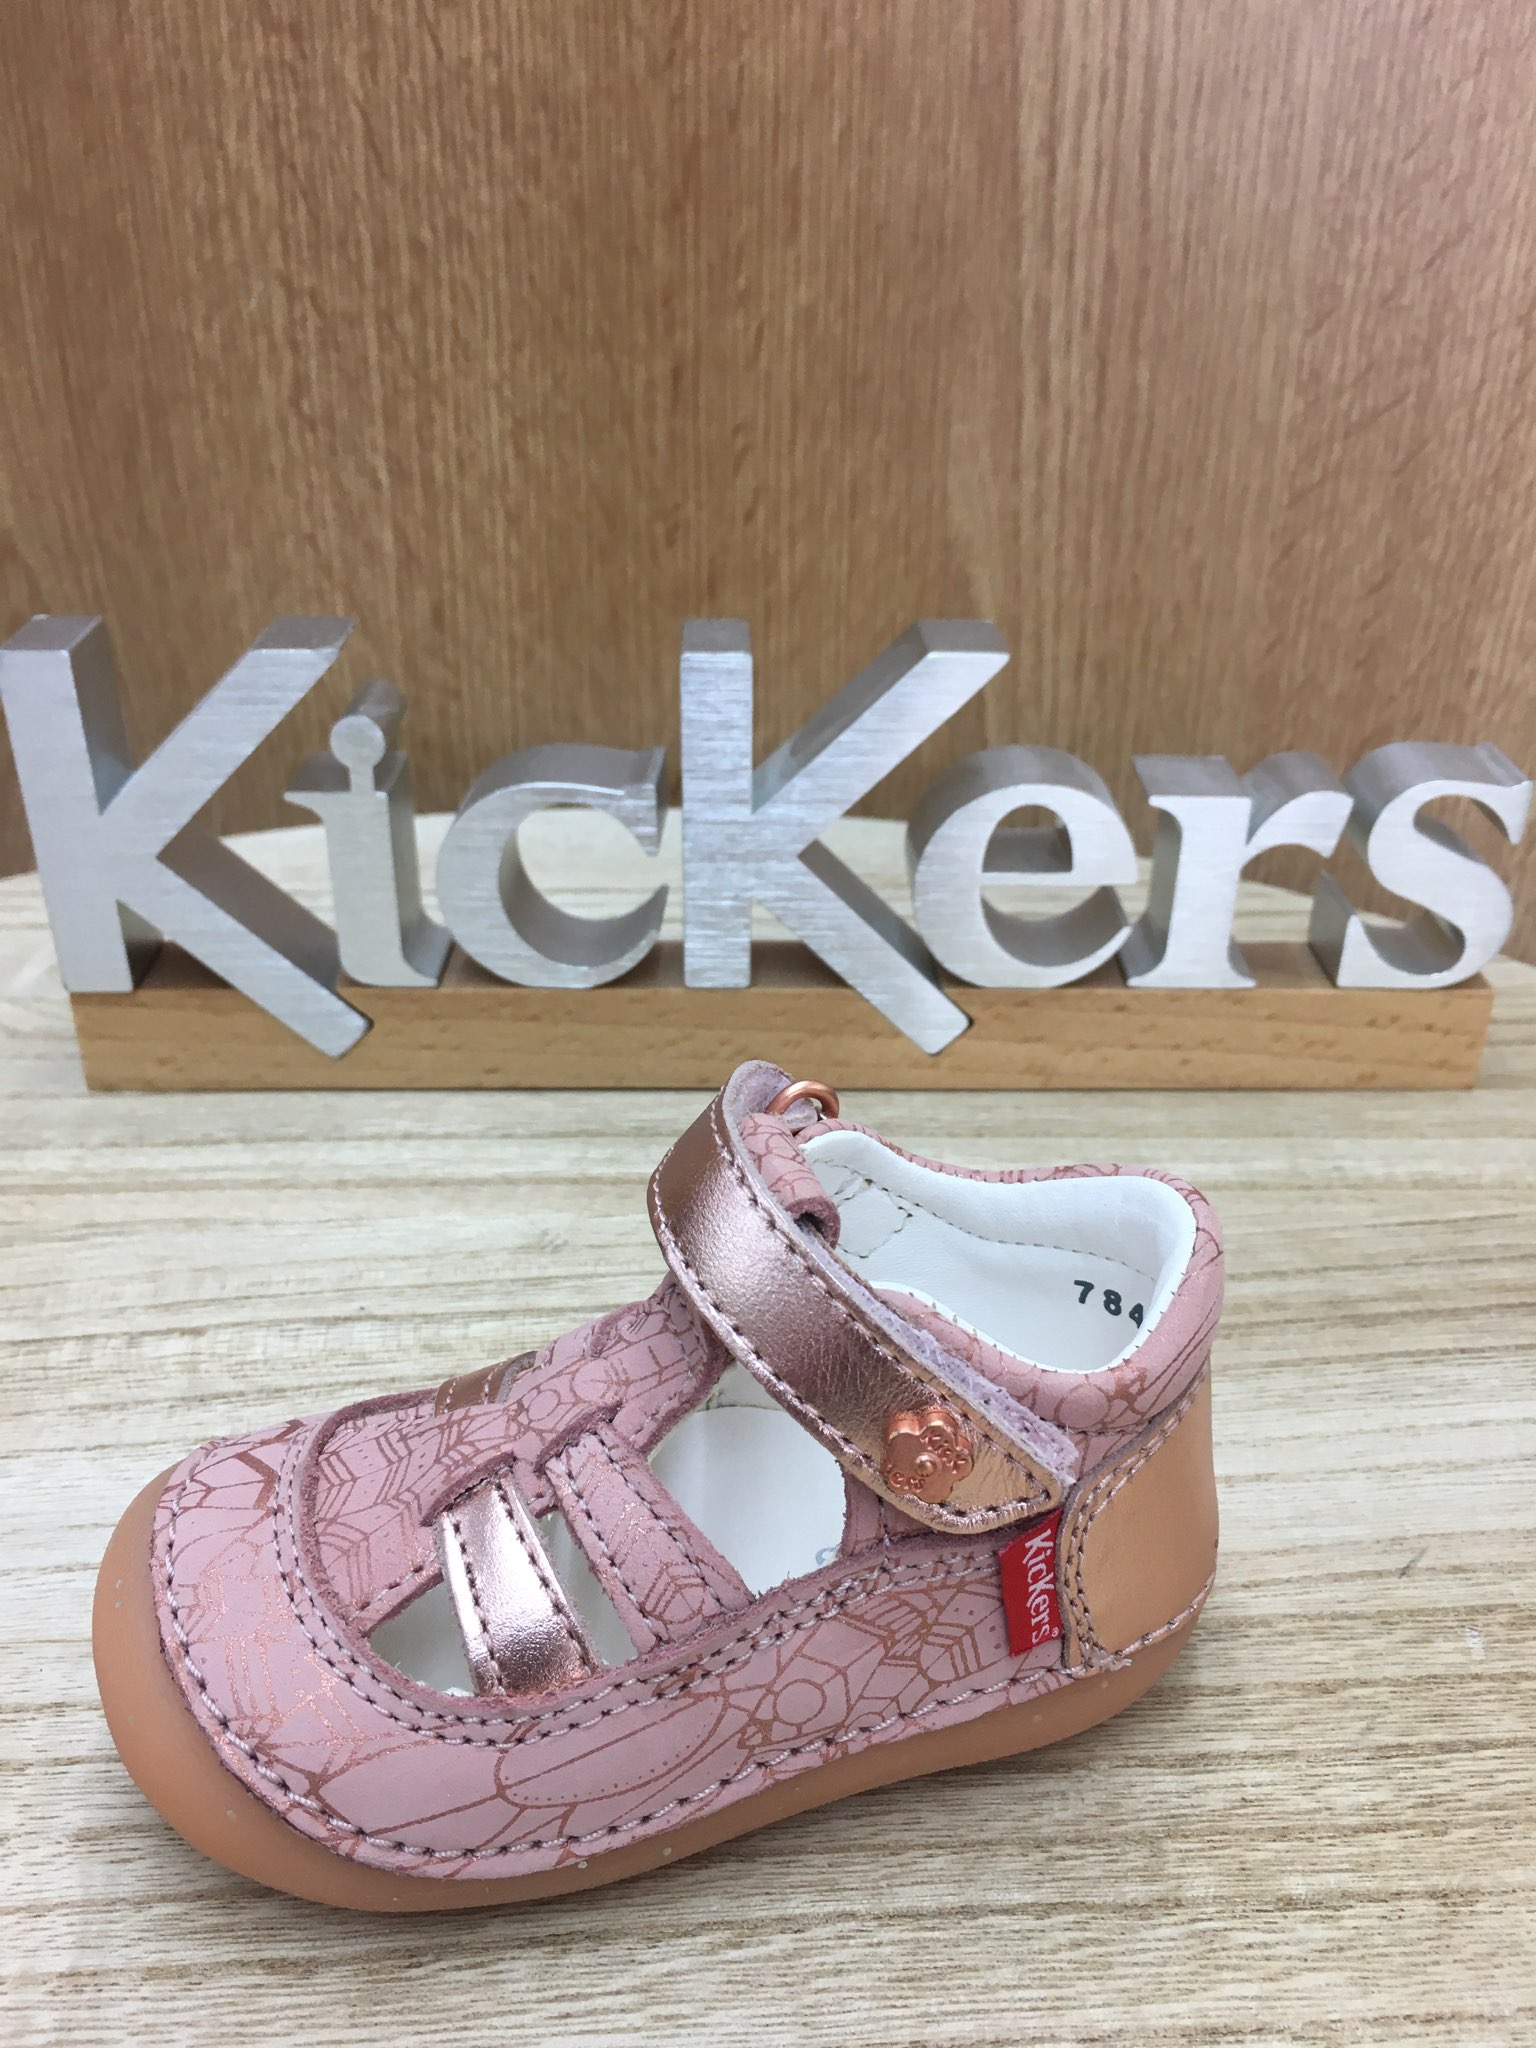 Chaussures Kickers Bébé - Montbrison click and collect